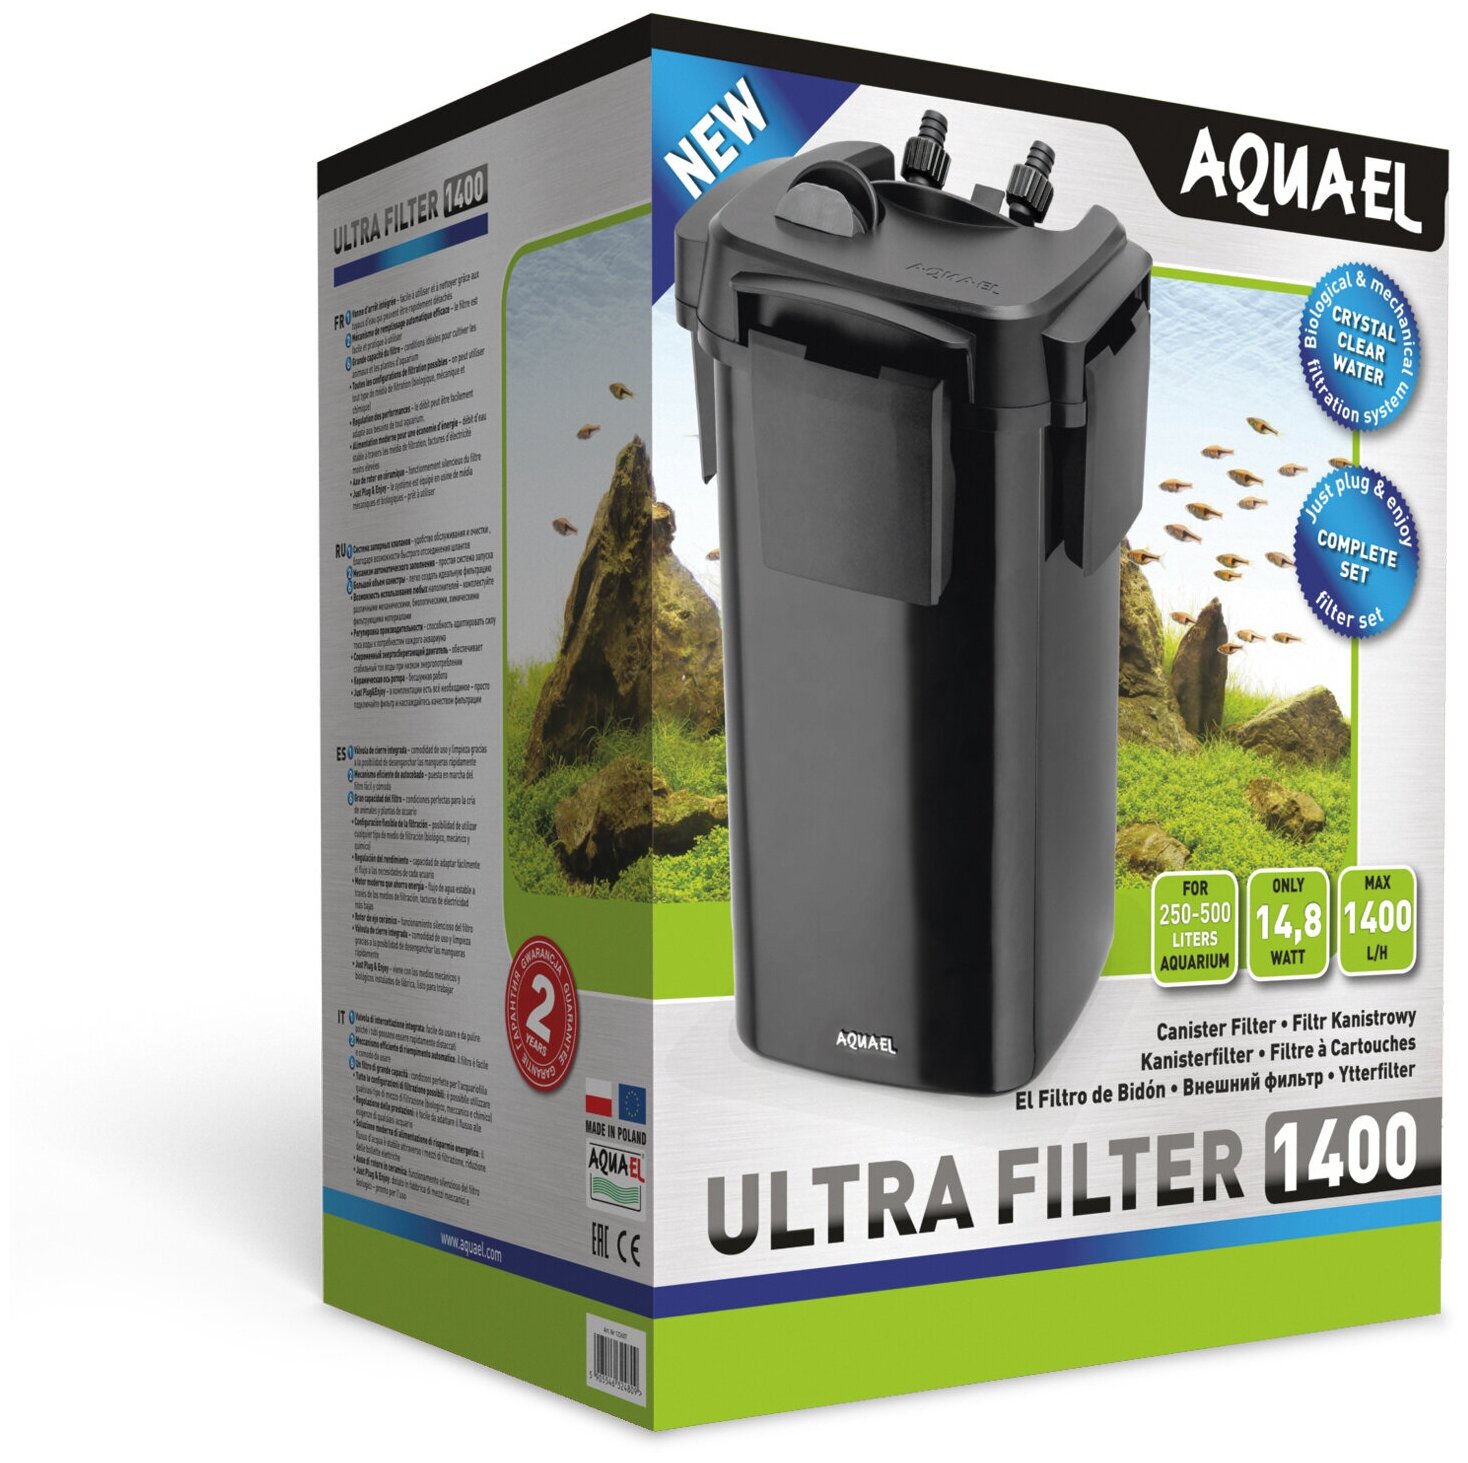 Aquael Внешний фильтр ULTRA FILTER 1400 для аквариумов объемом 250-500 л - фото №1